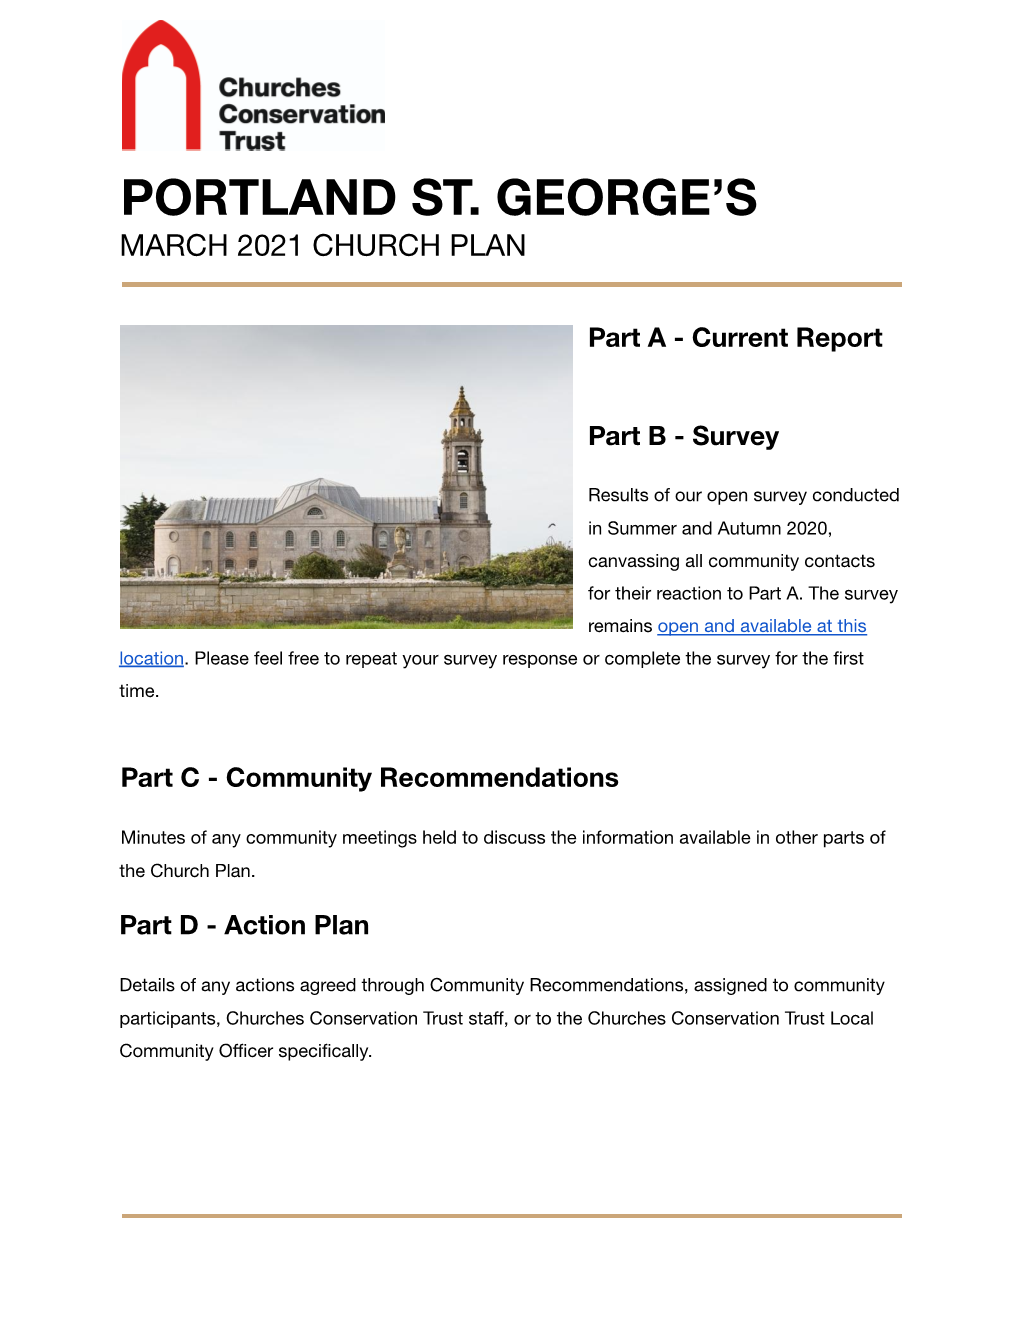 Portland Church Plan